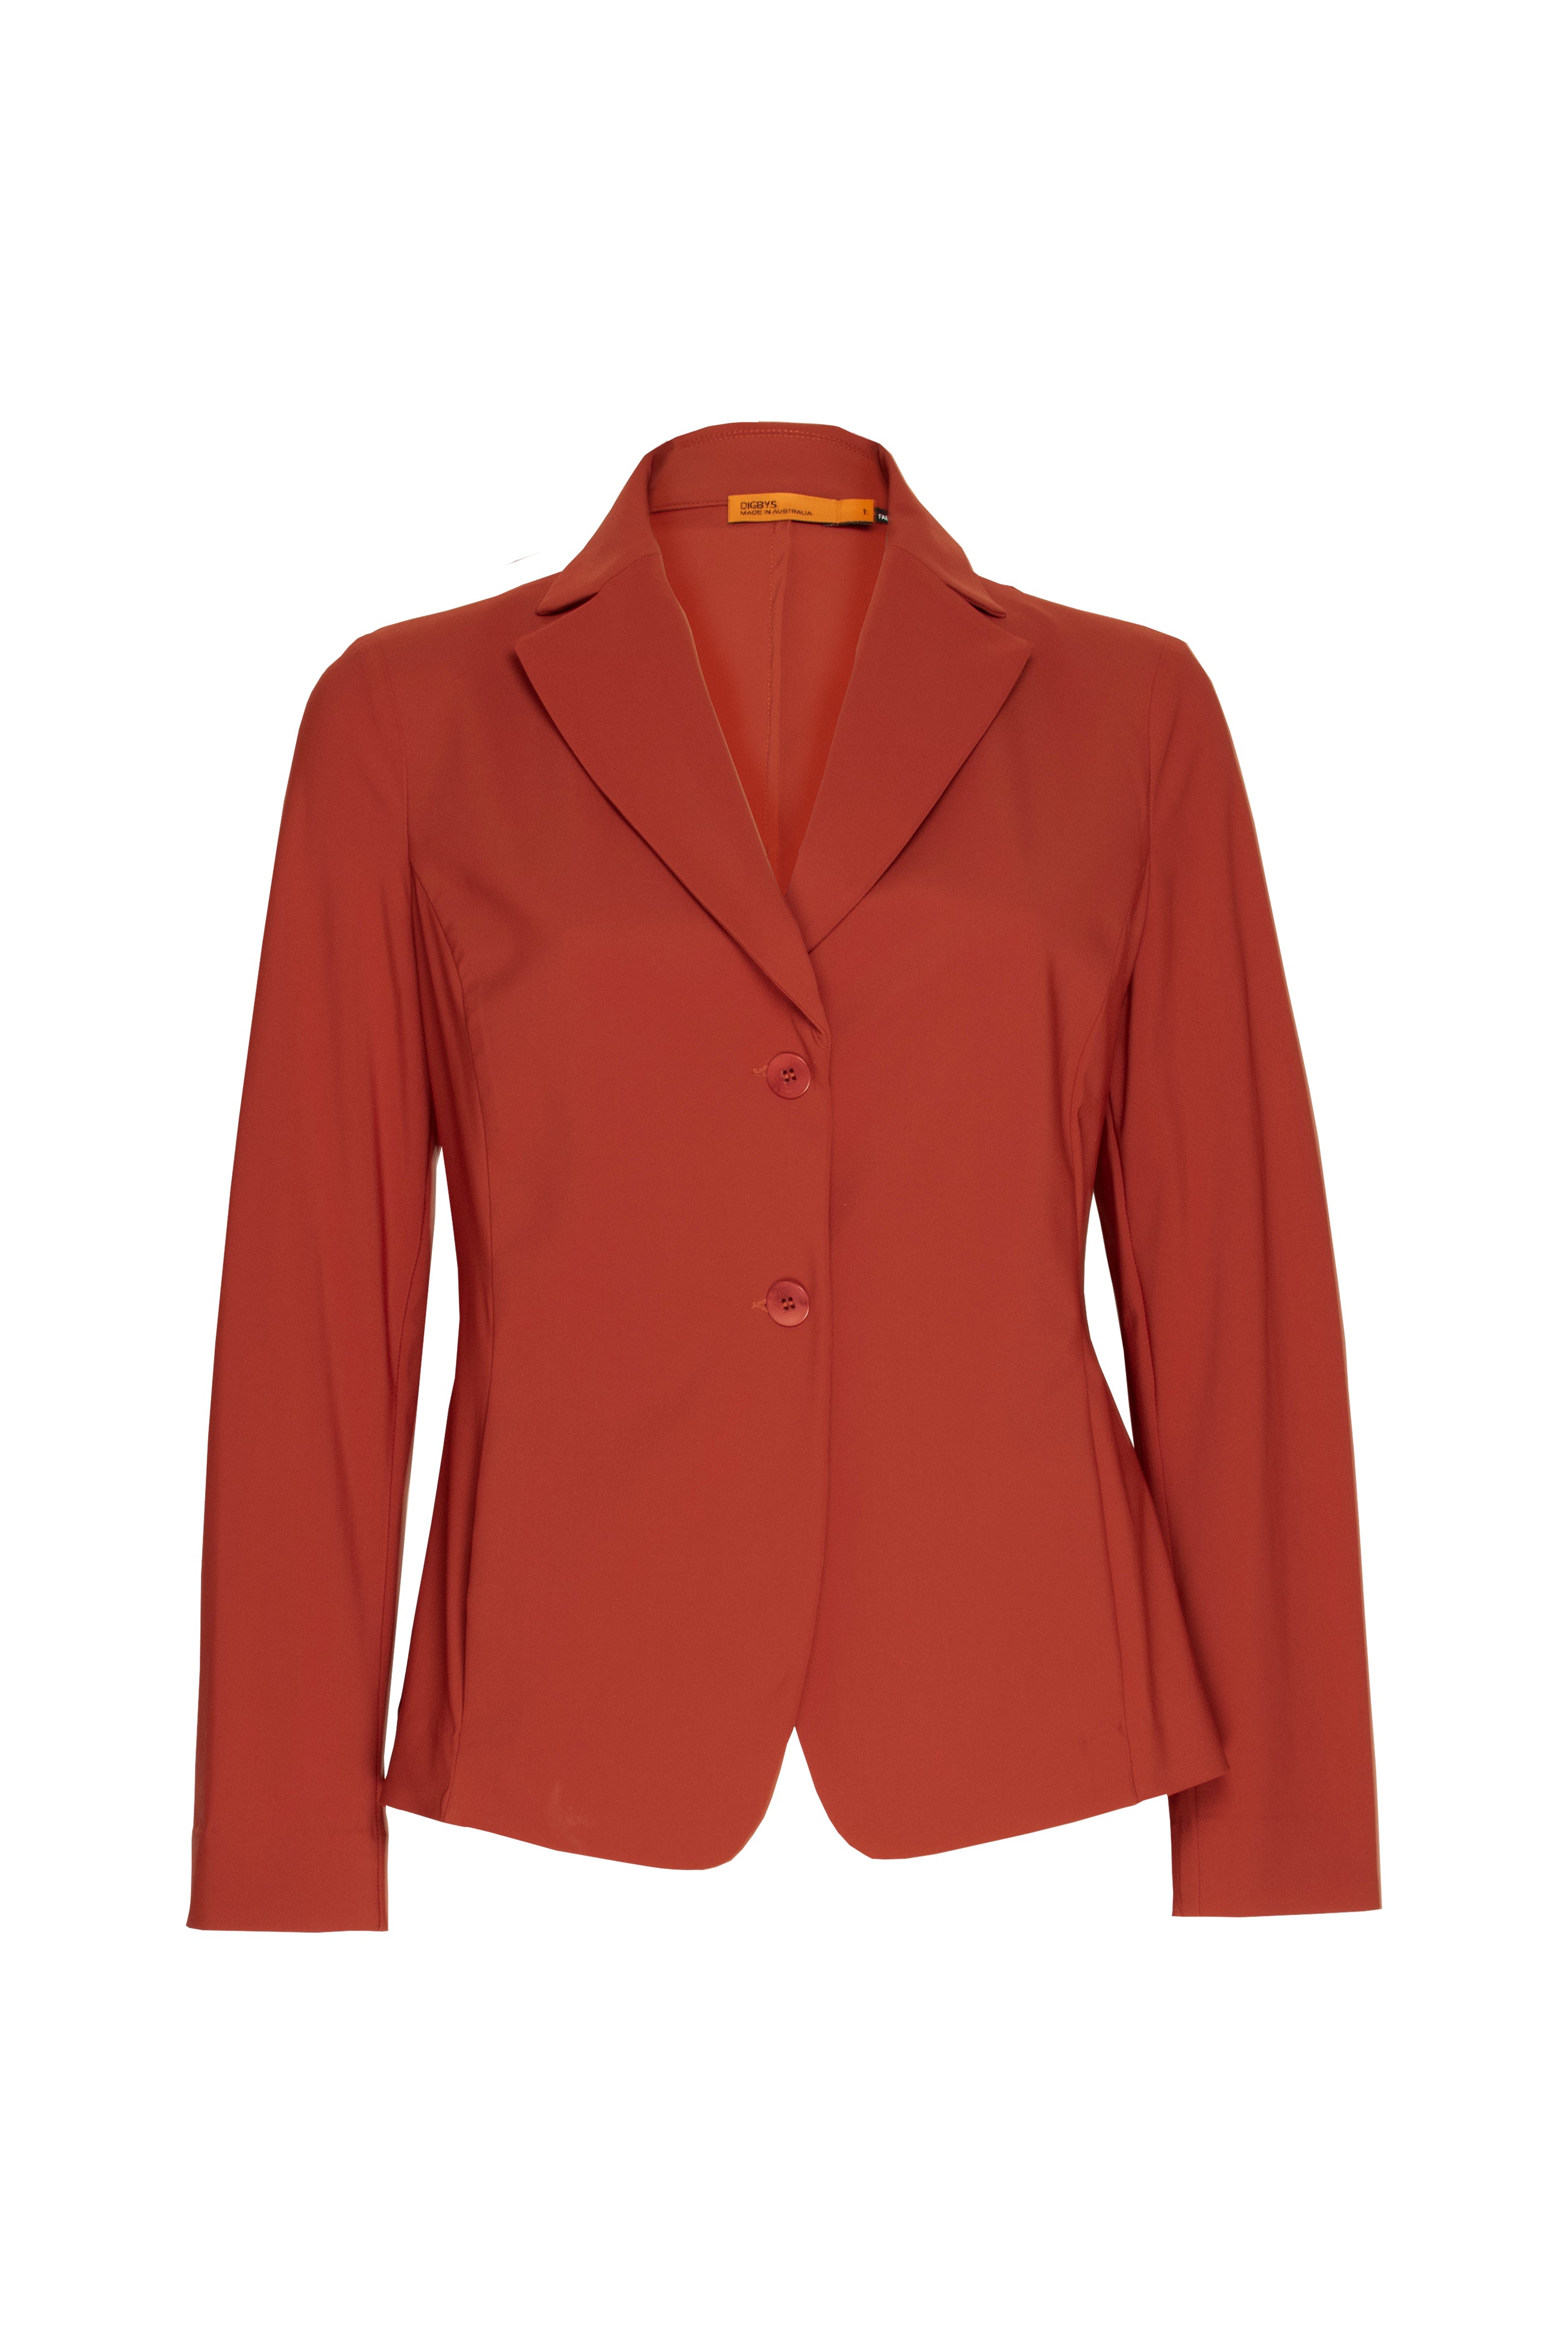 High Revere Collar Jacket - Paprika Jersey 6054